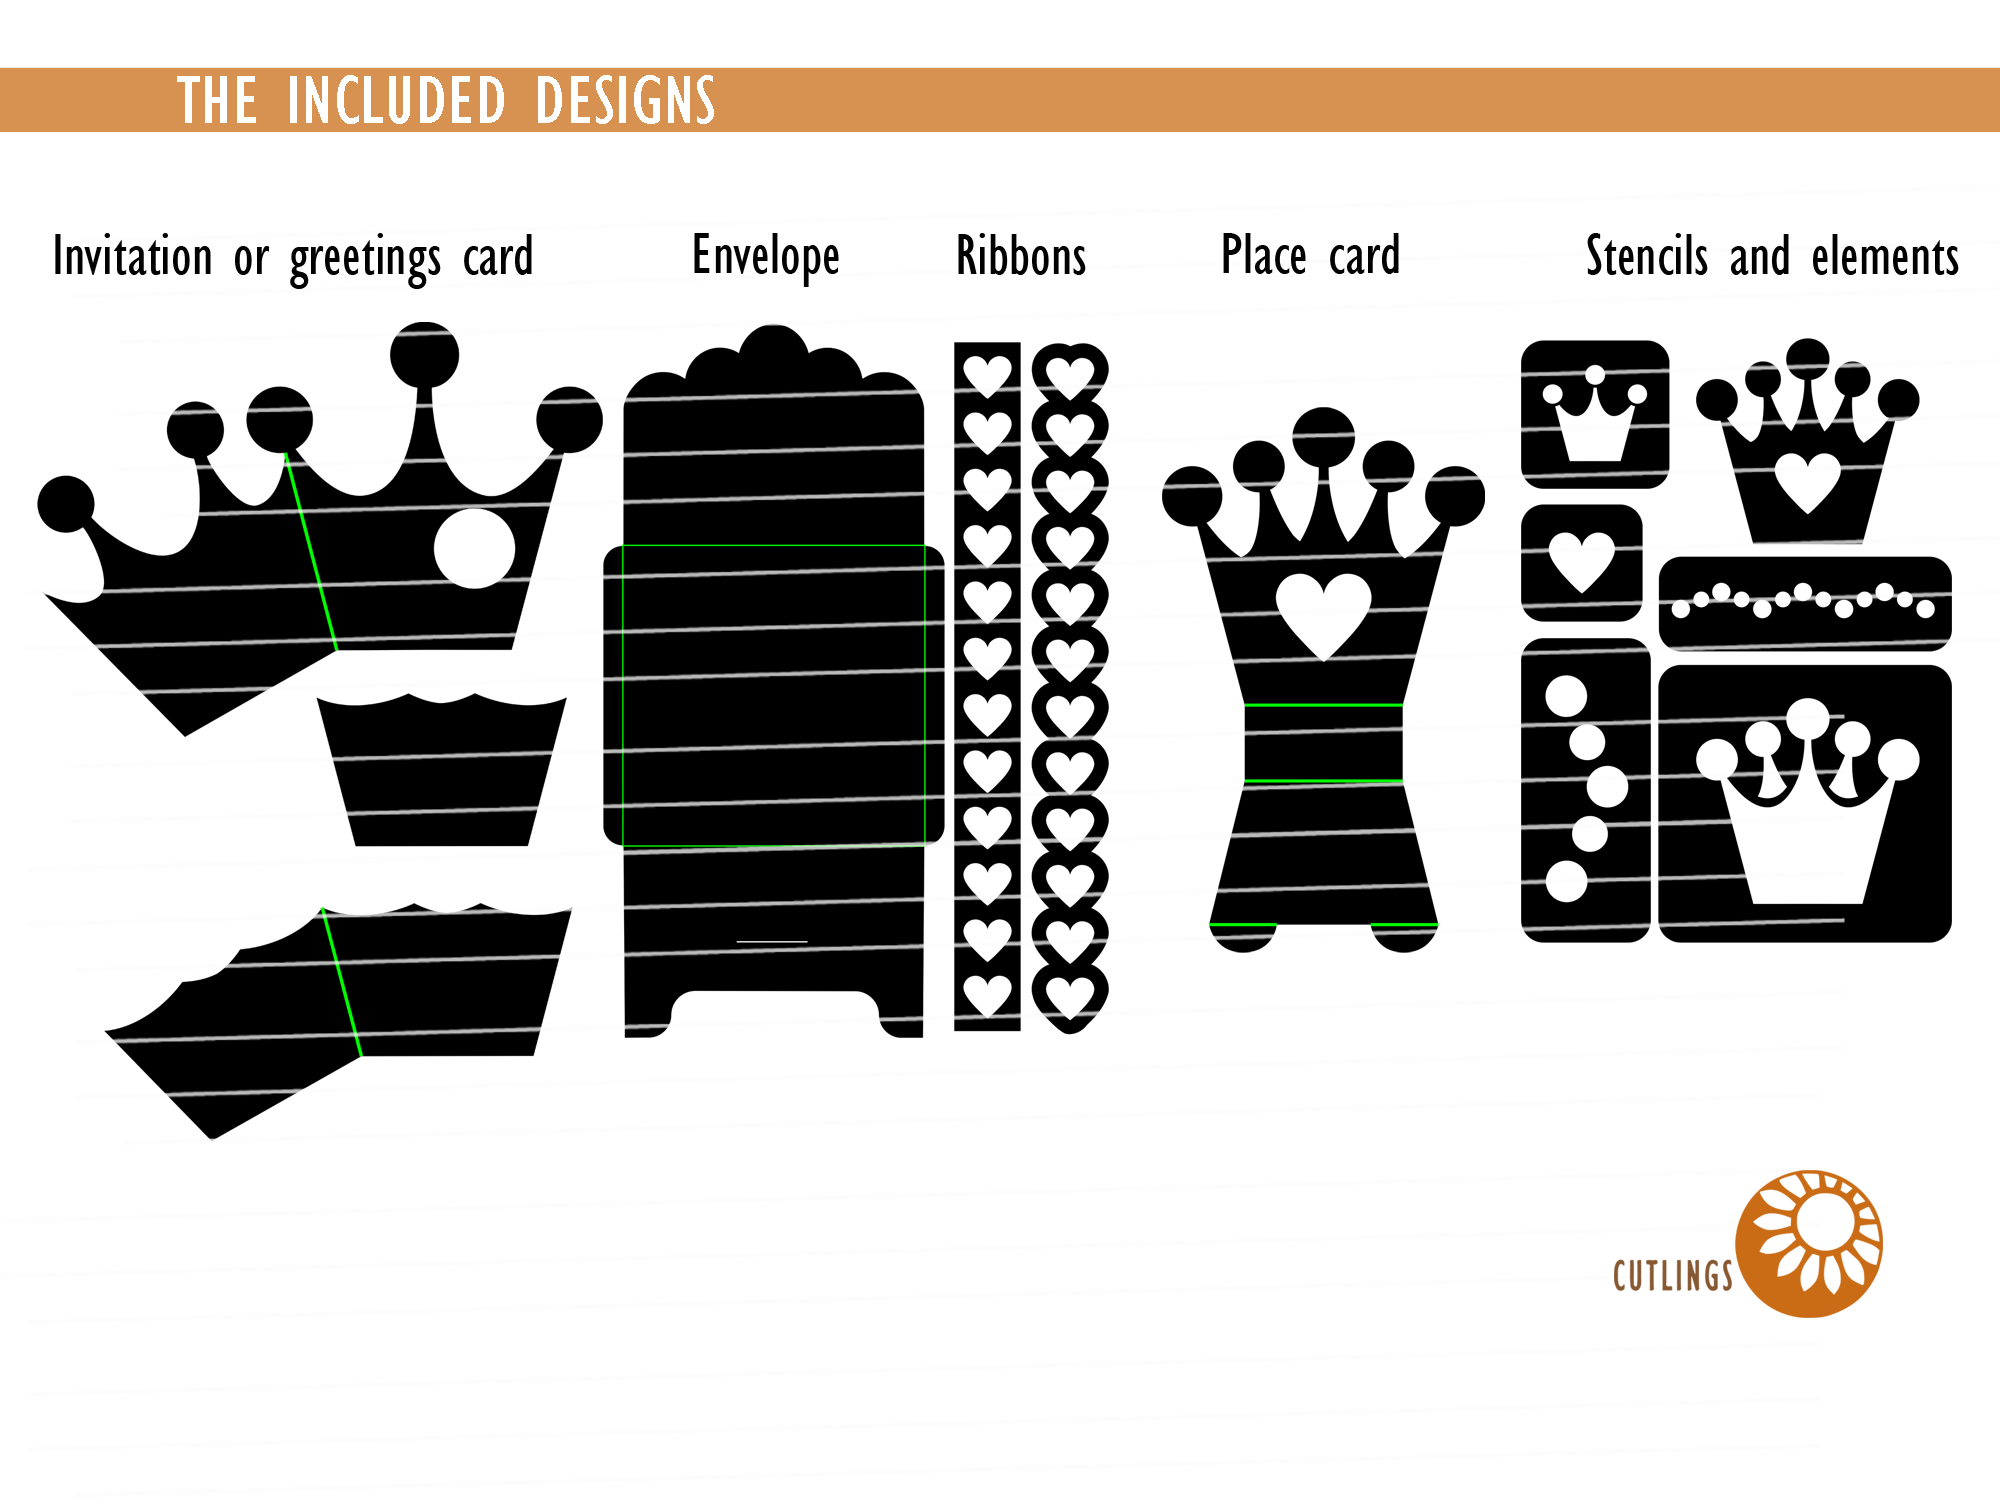 Princess crown card design overview